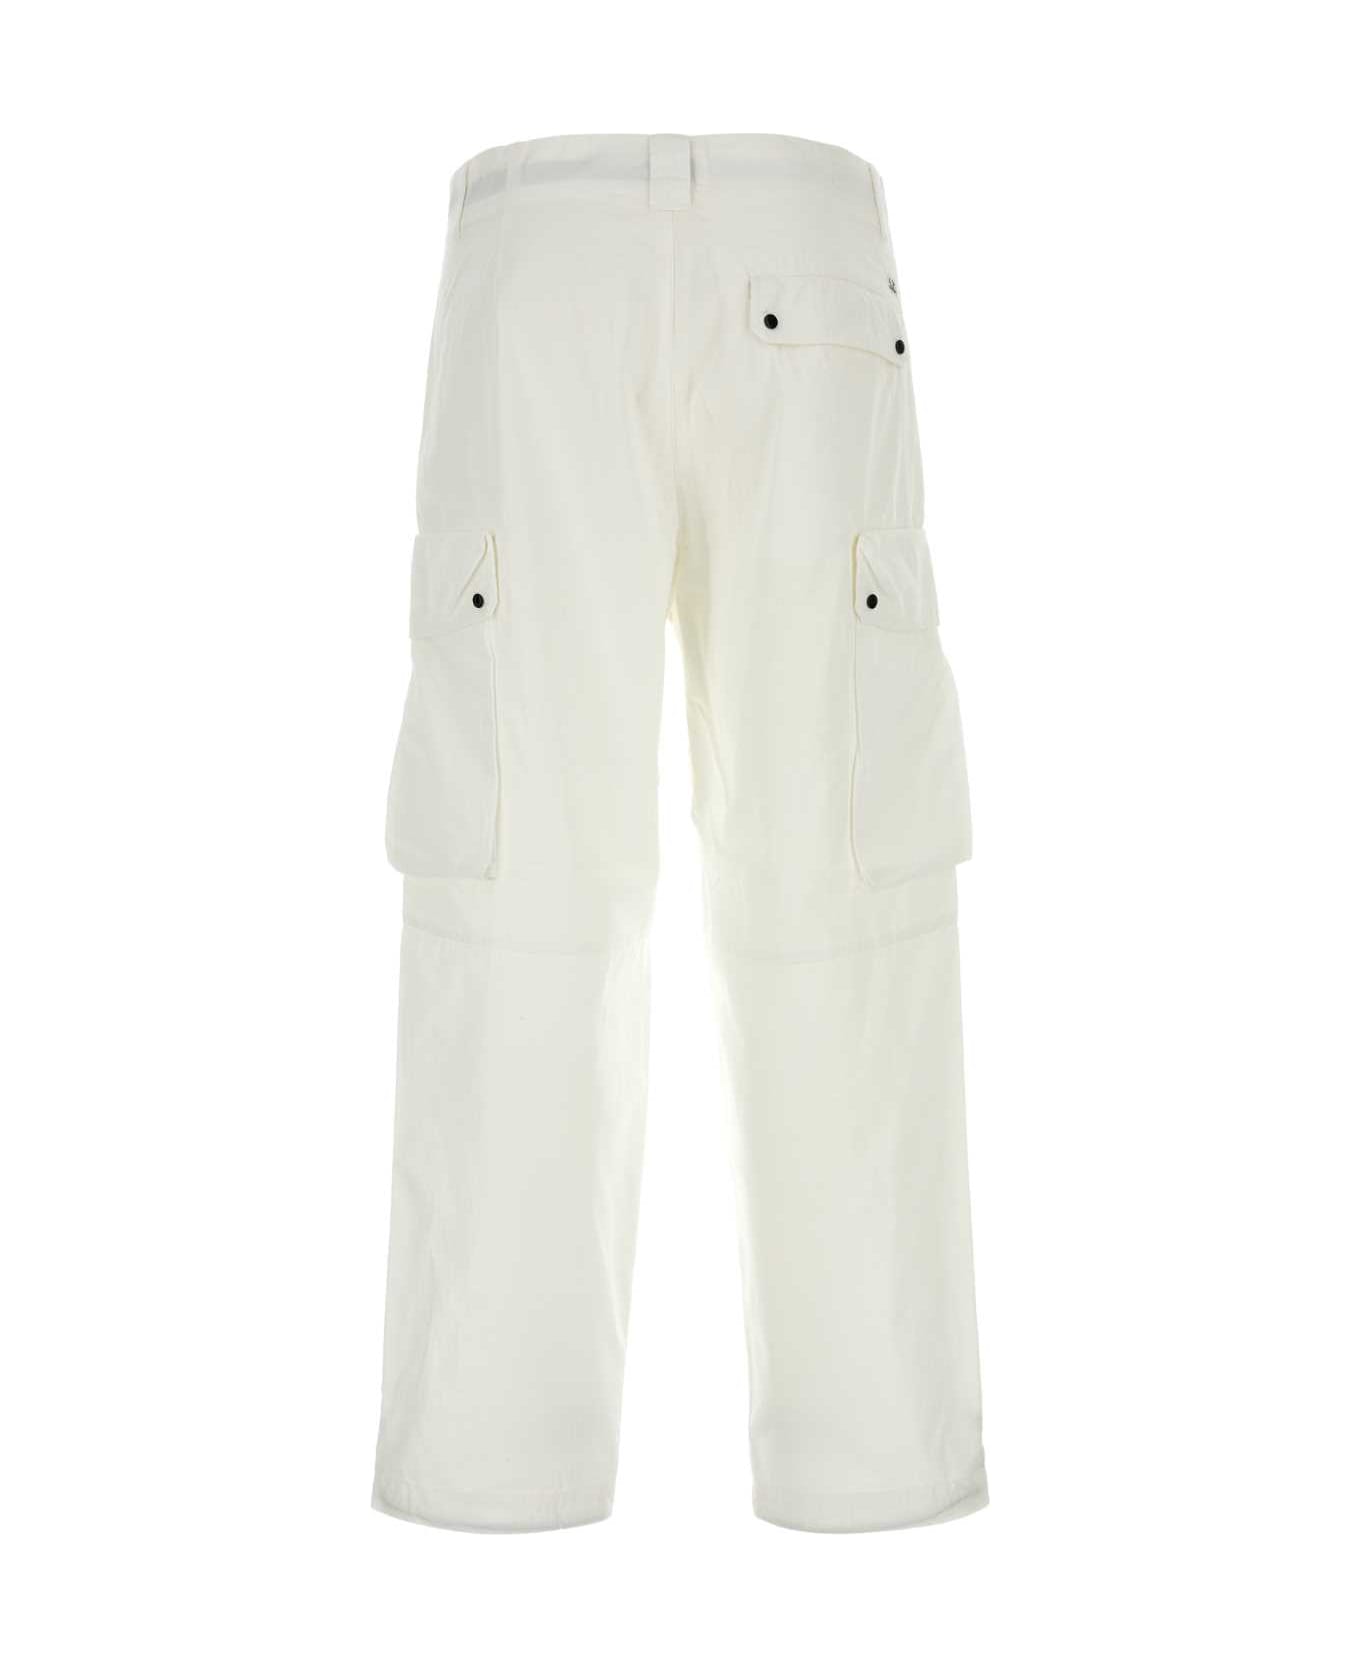 C.P. Company White Cotton Pant - GAUZEWHITE ボトムス